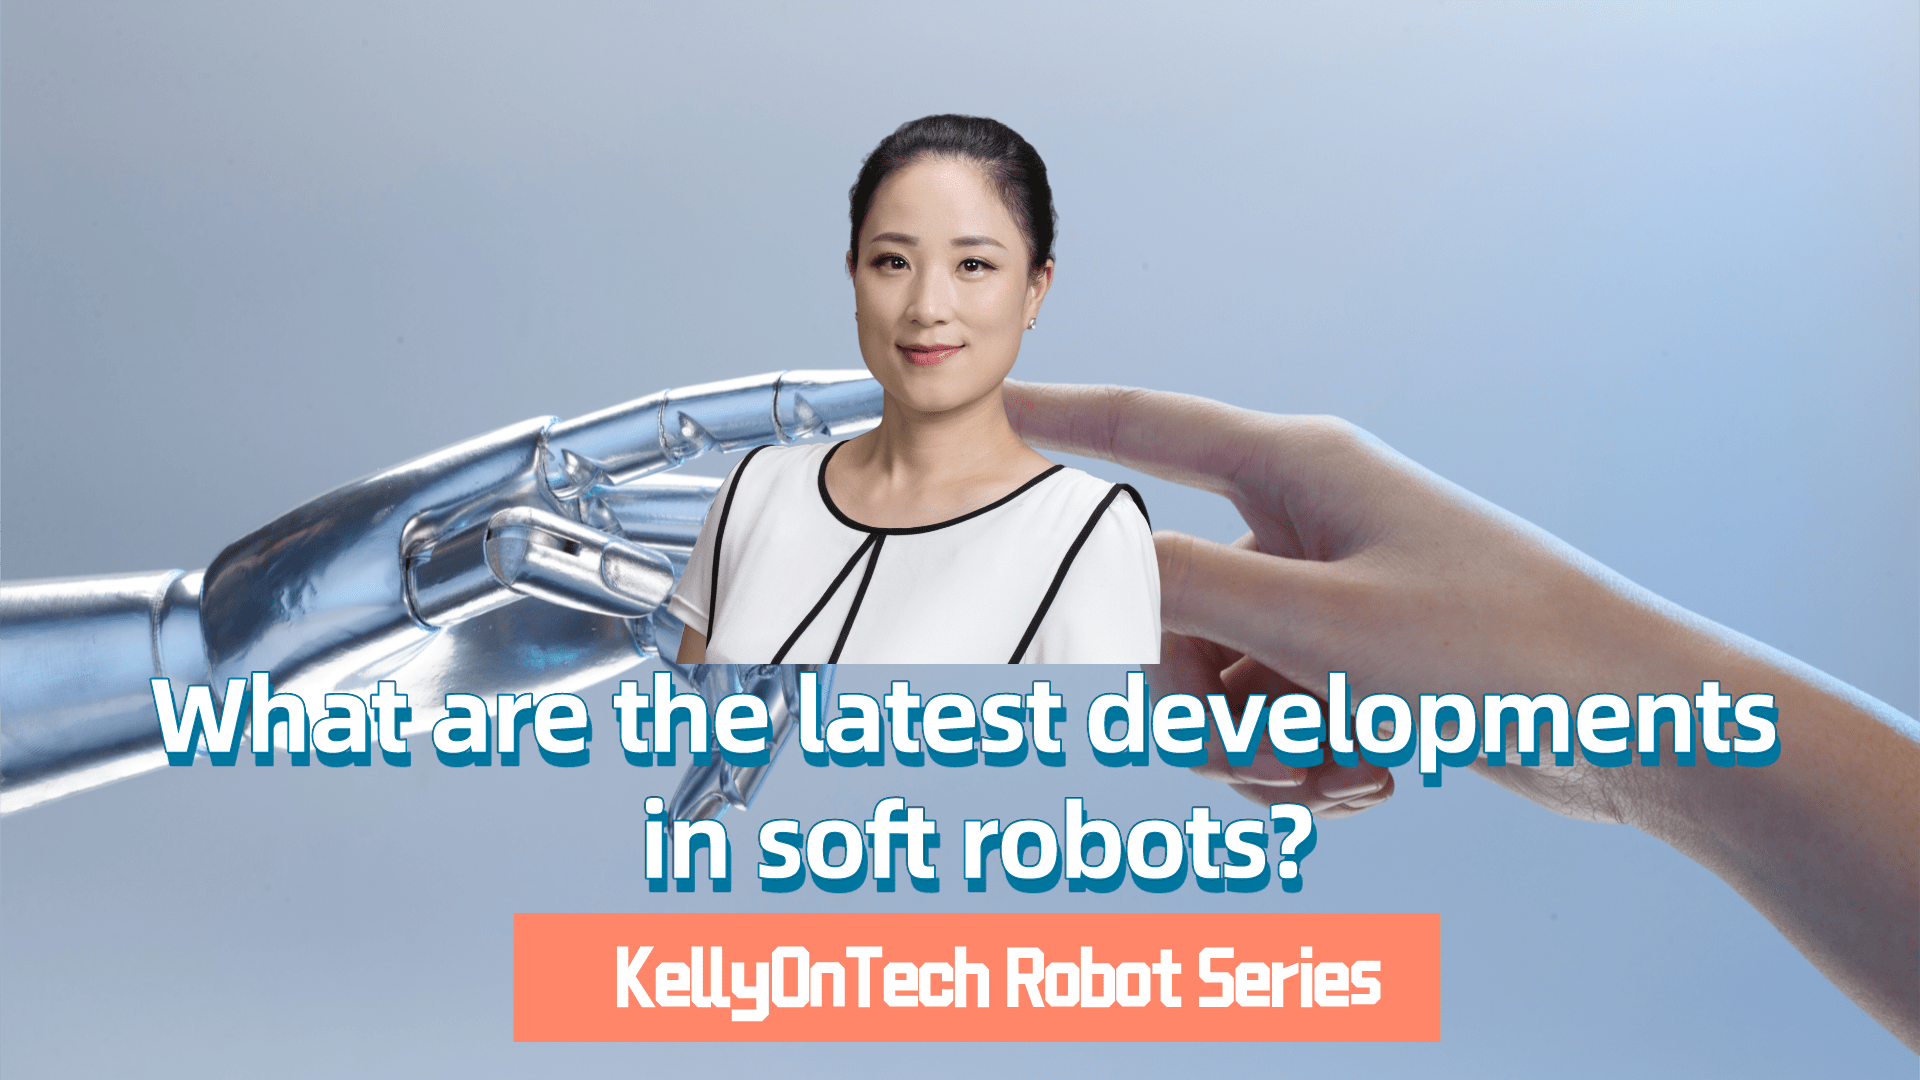 KellyOnTech latest developments in soft robots